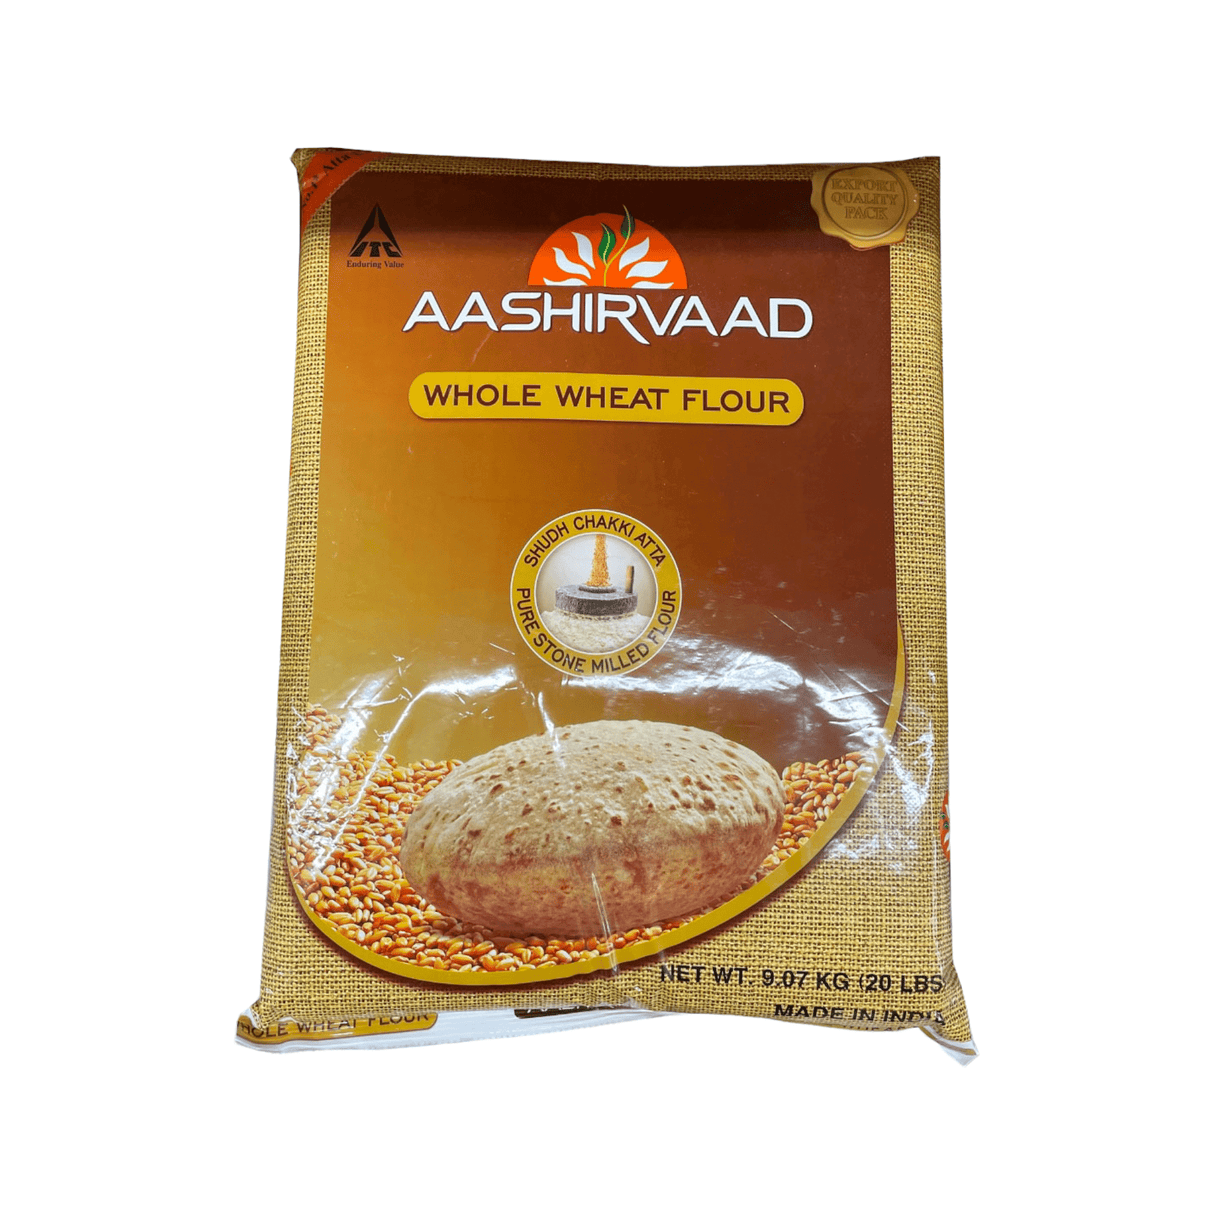 AASHIRVAAD Whole Wheat Flour